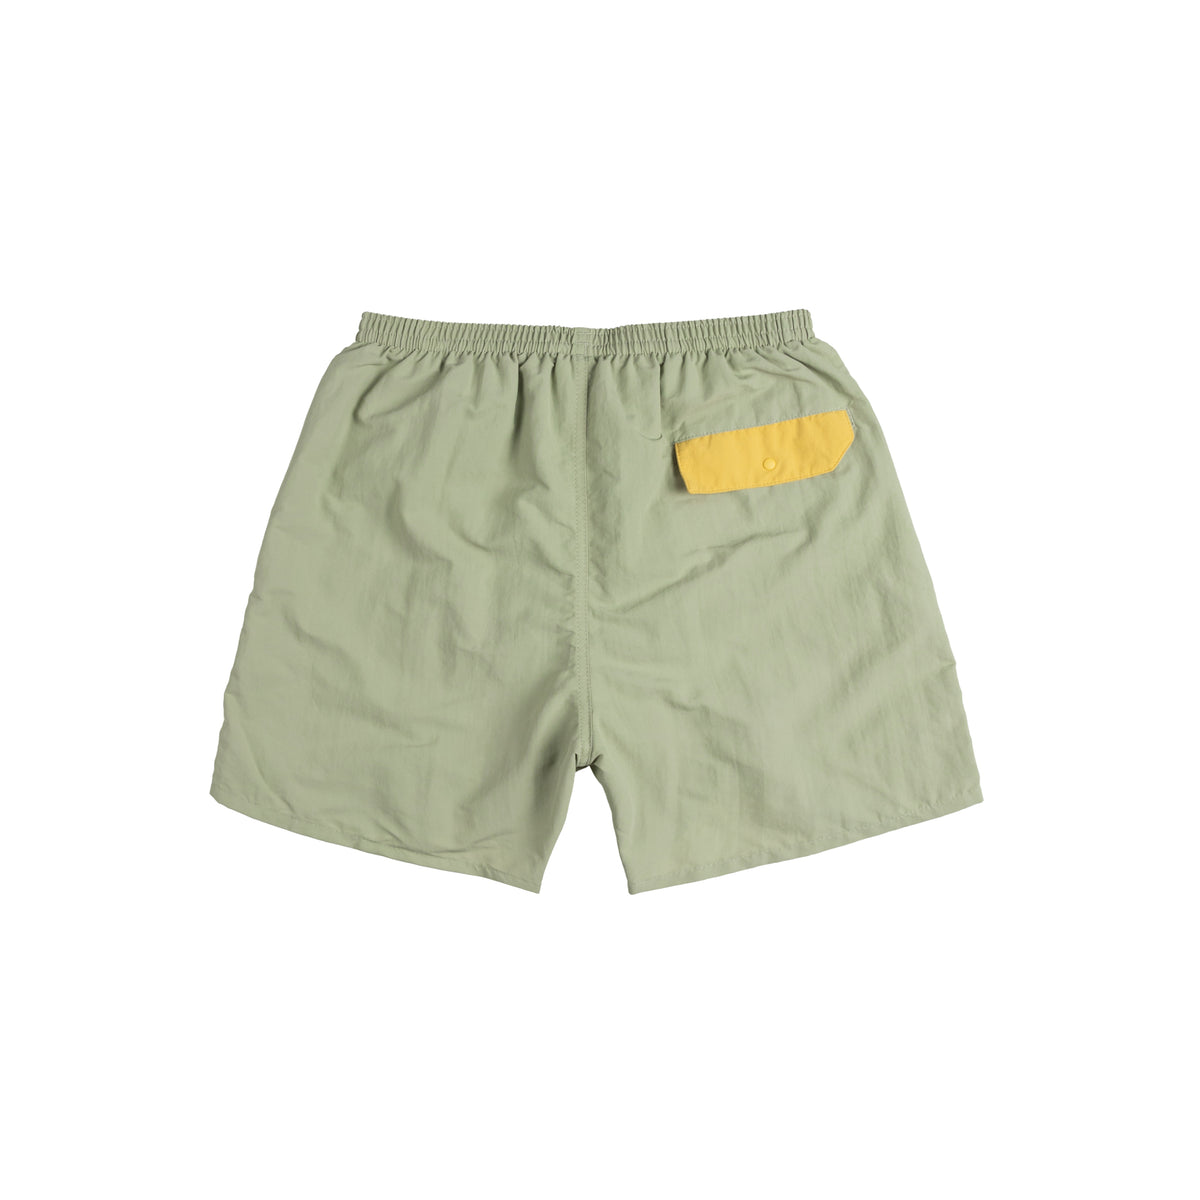 Patagonia Baggies Shorts – buy now at Asphaltgold Online Store!